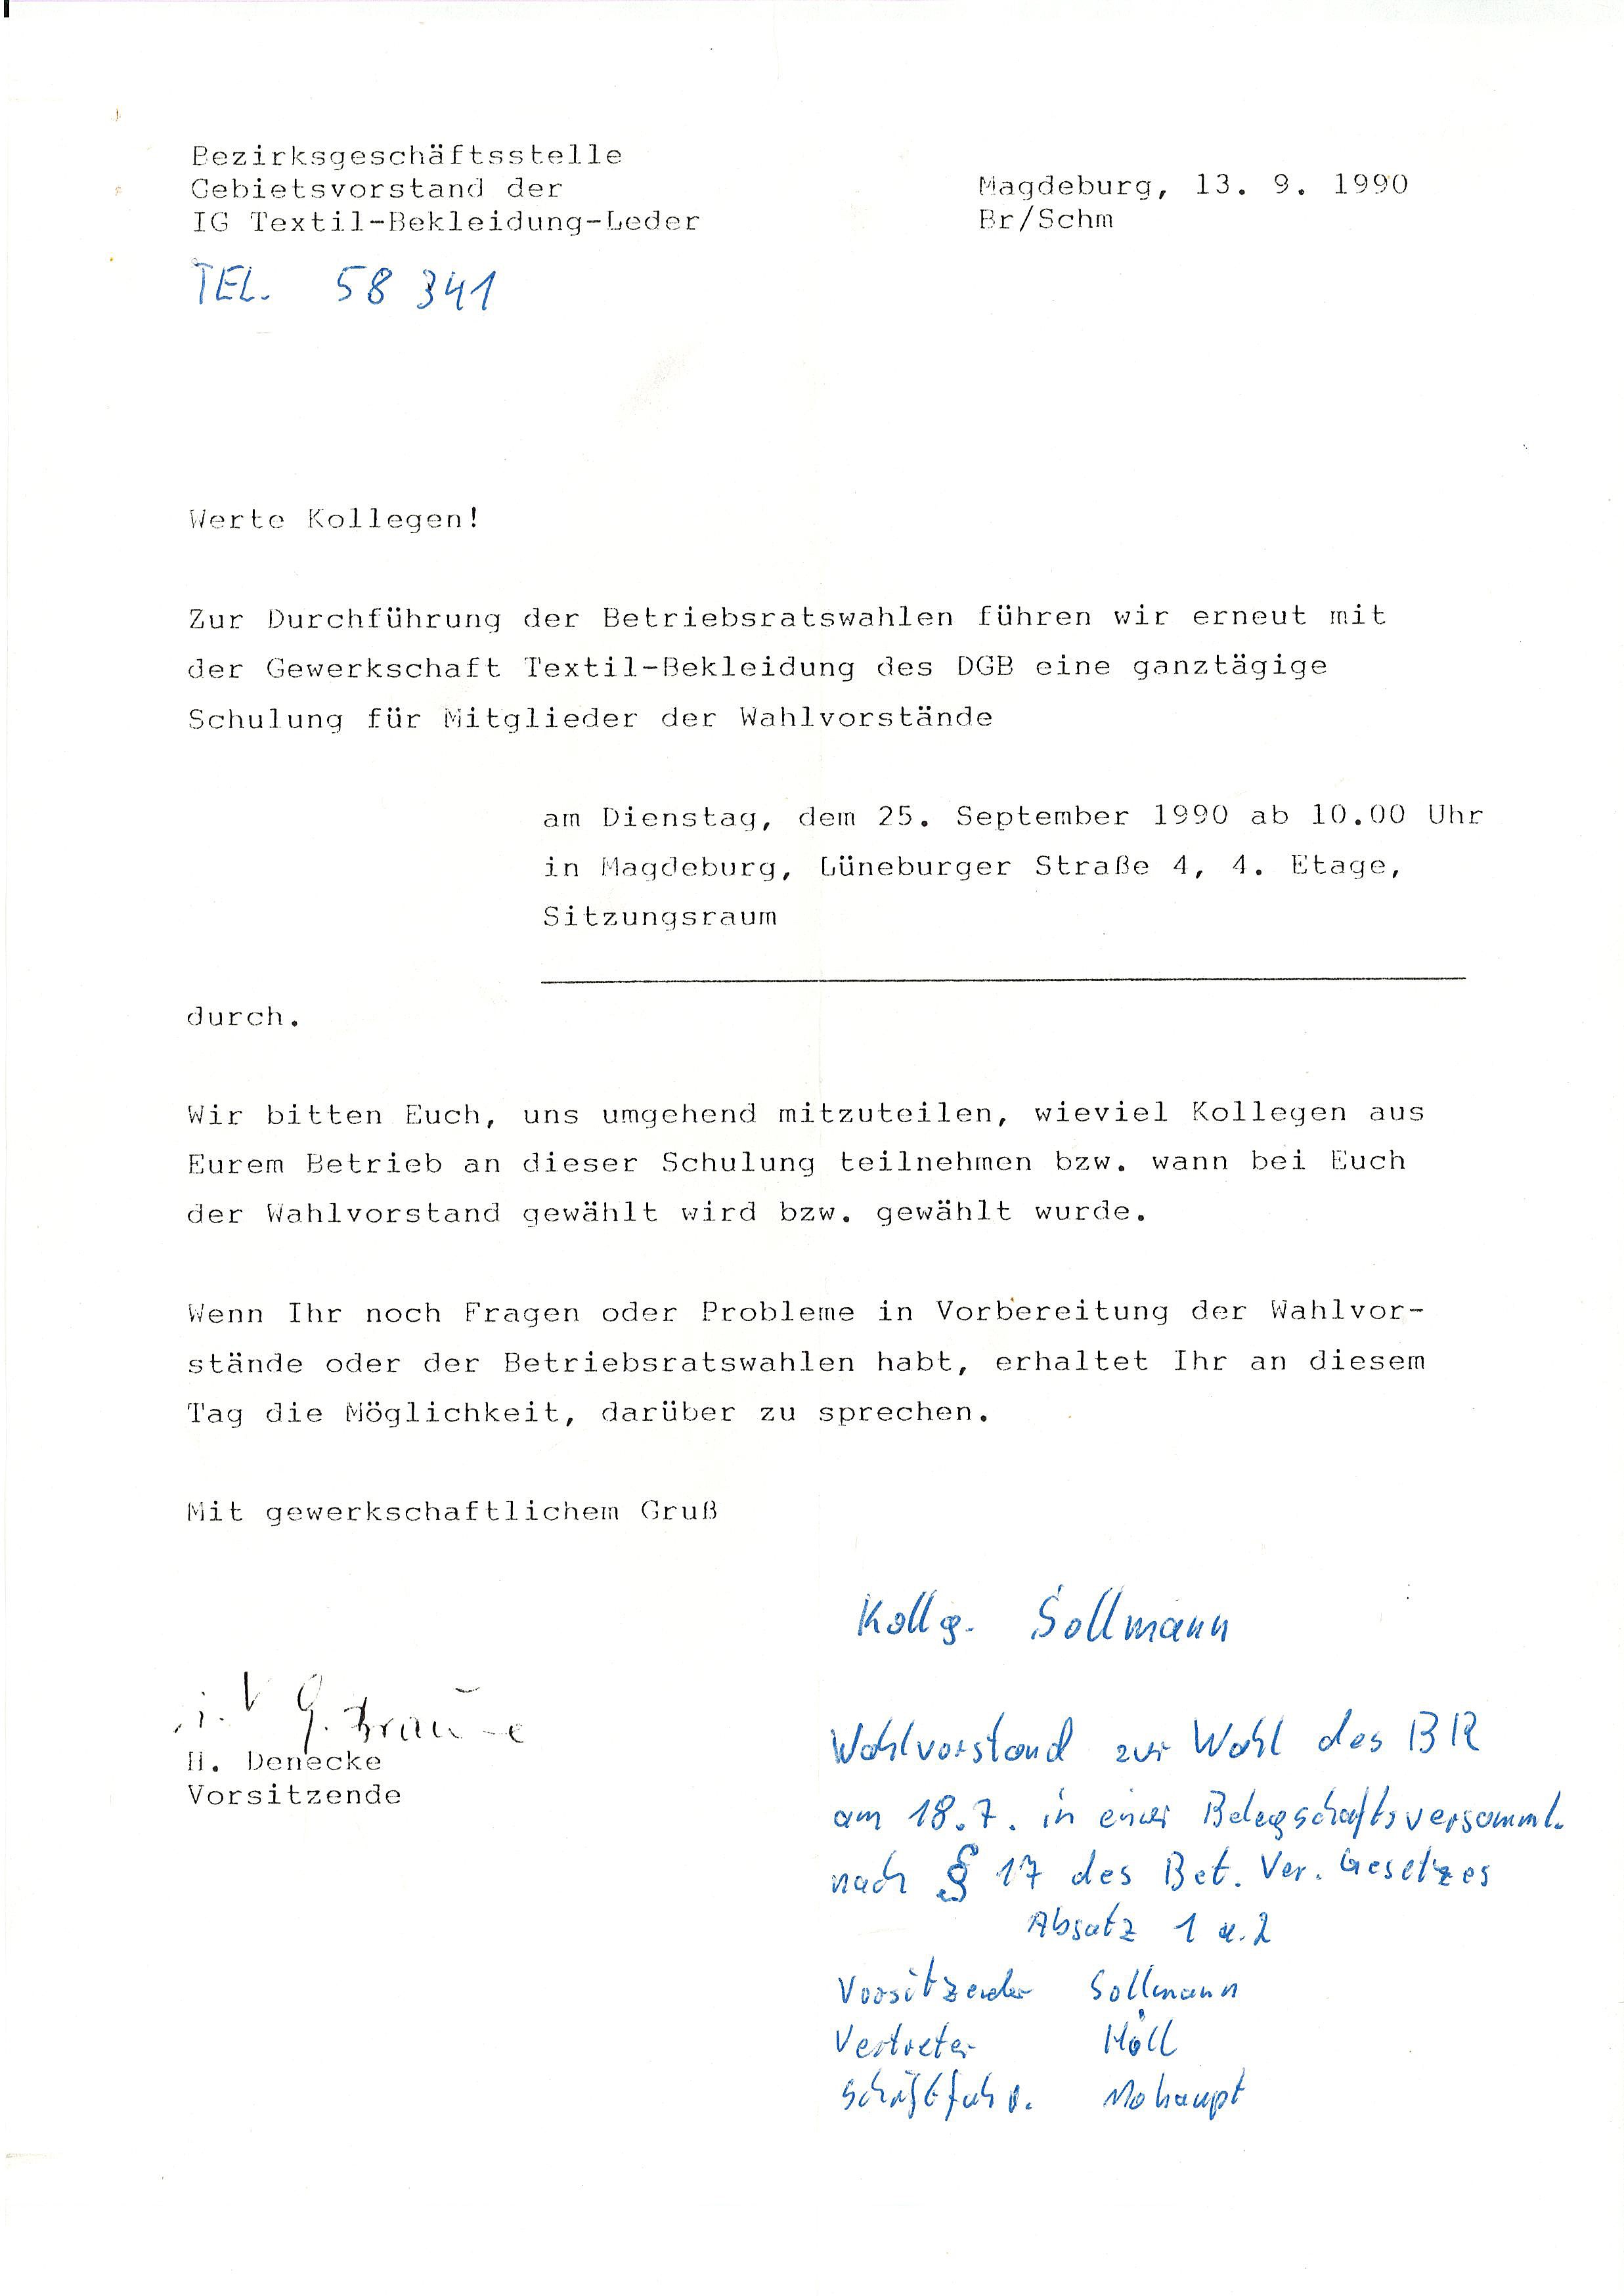 Info Betriebsratswahlen - IG Textil-Bekleidung-Leder - 13.09.1990 (Museum Wolmirstedt RR-F)